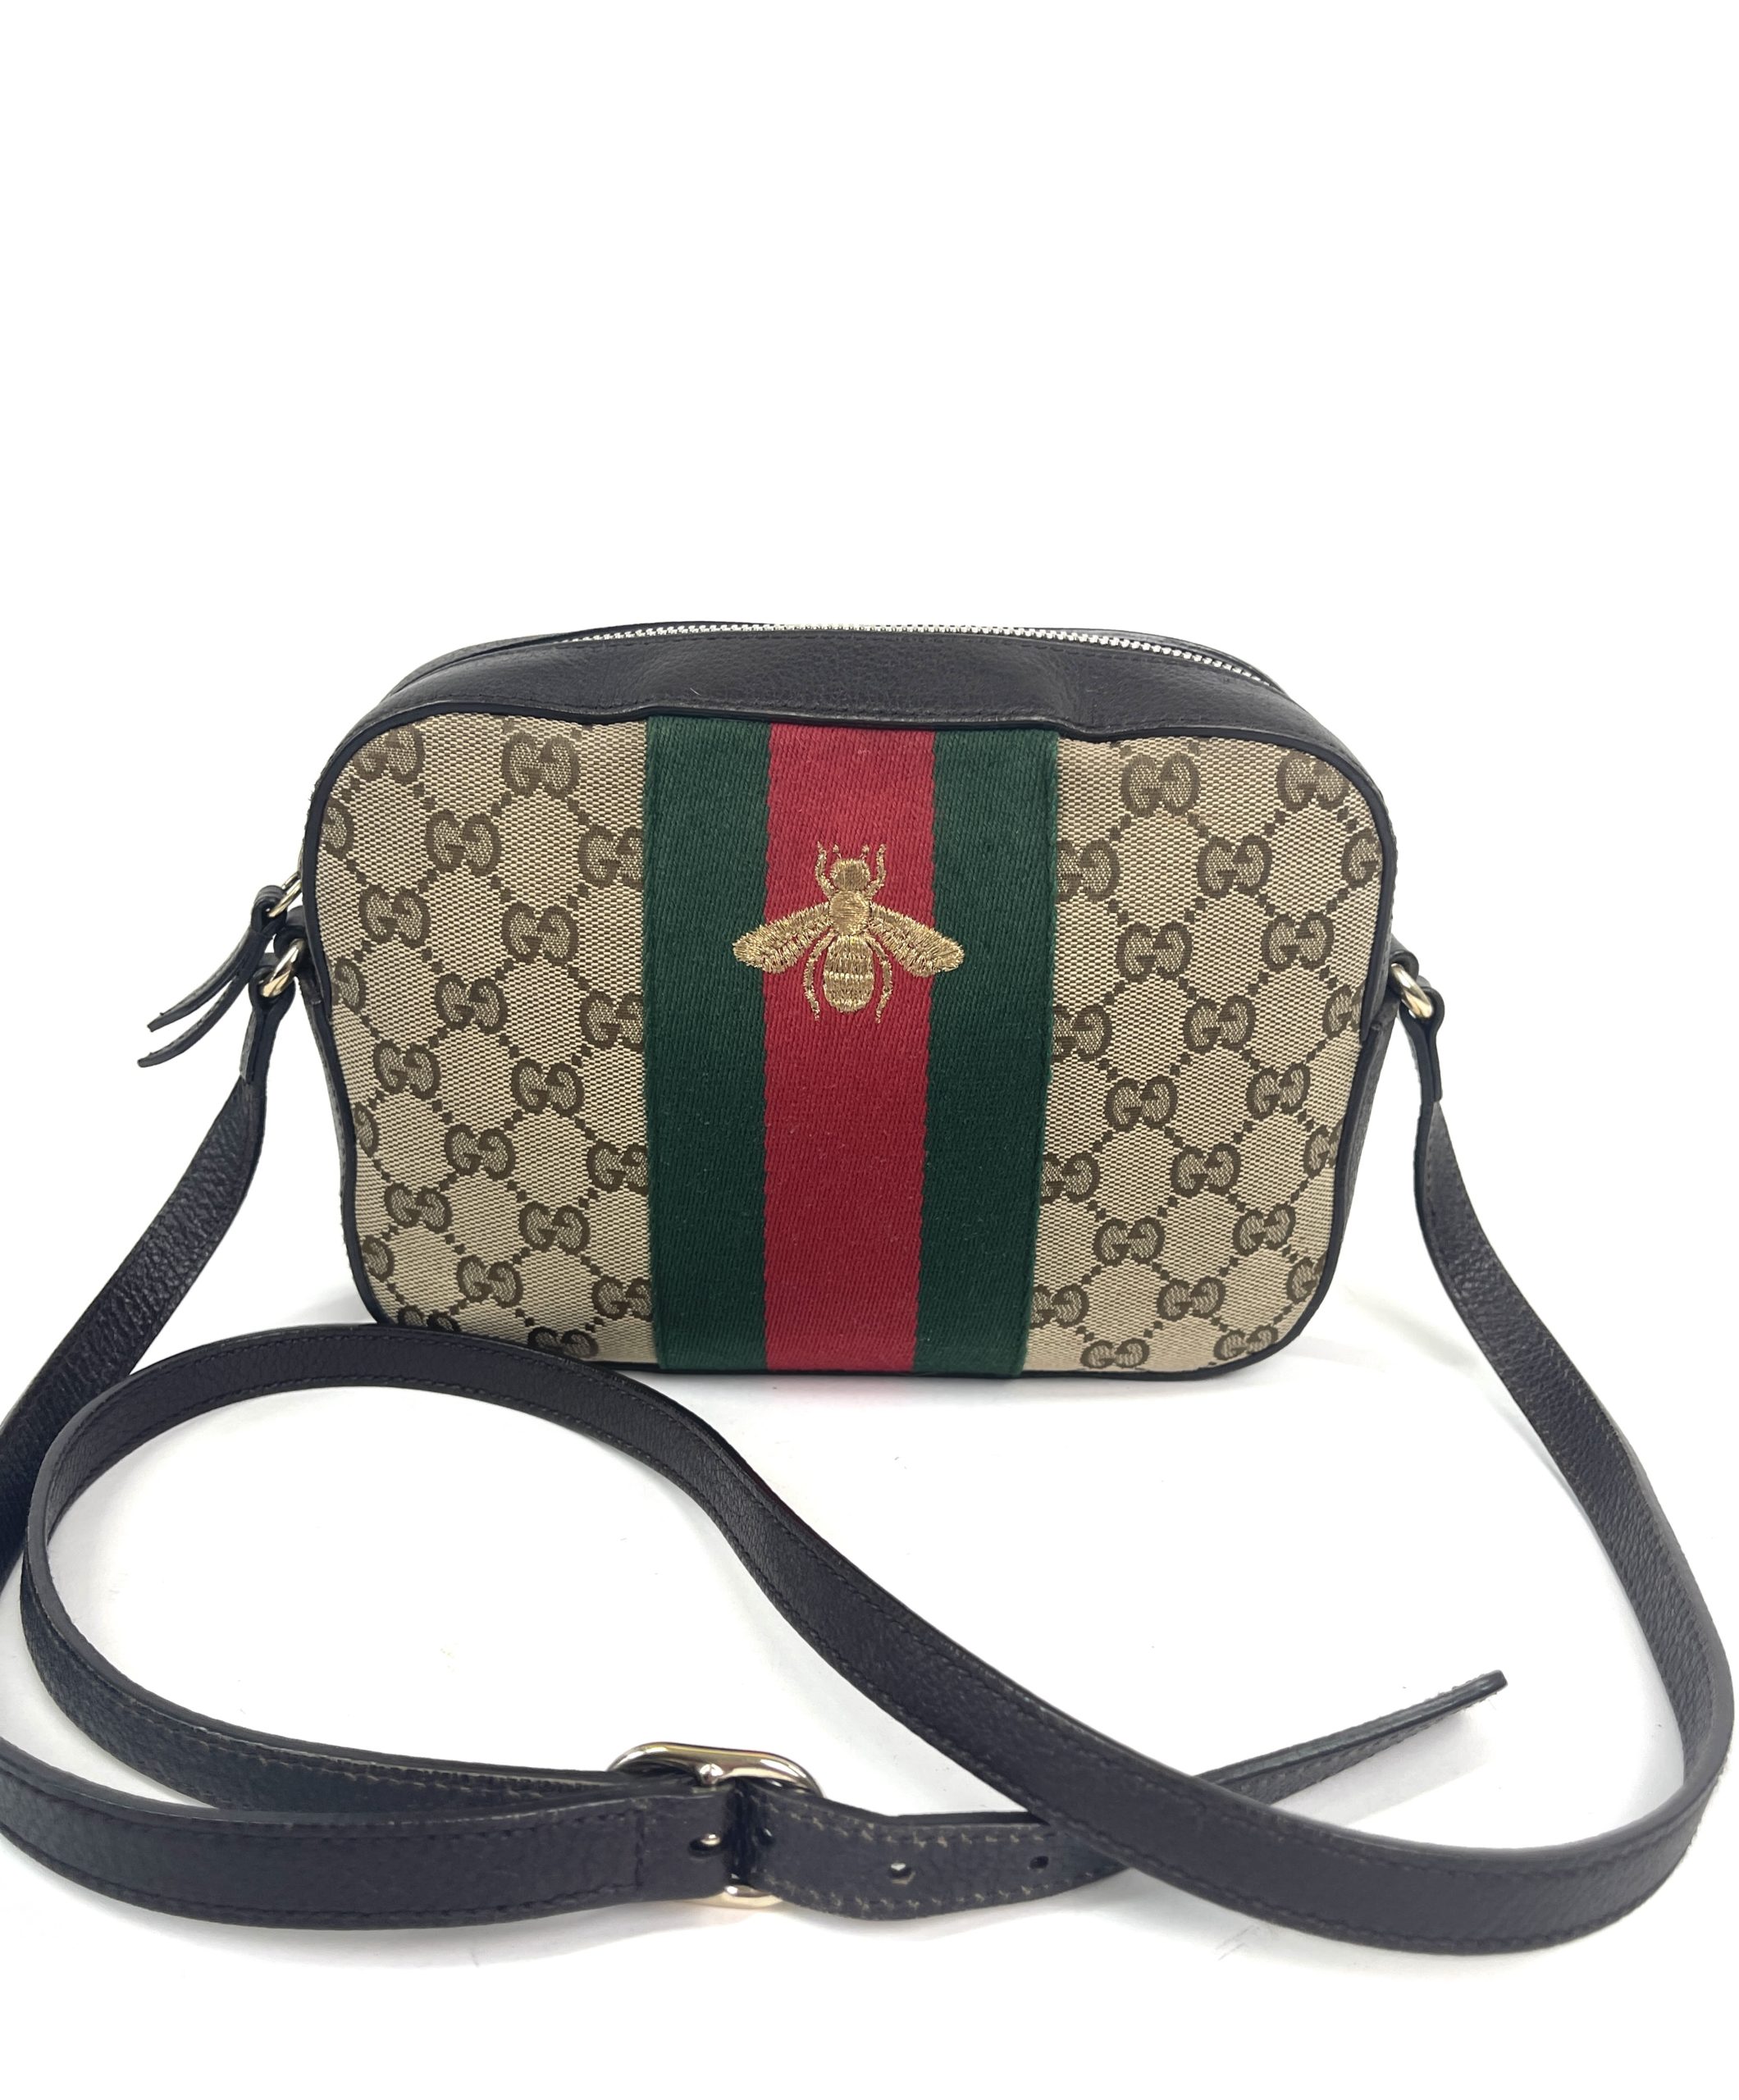 Gucci Monogram Messenger Bag Dark Brown in Very Good Condition 